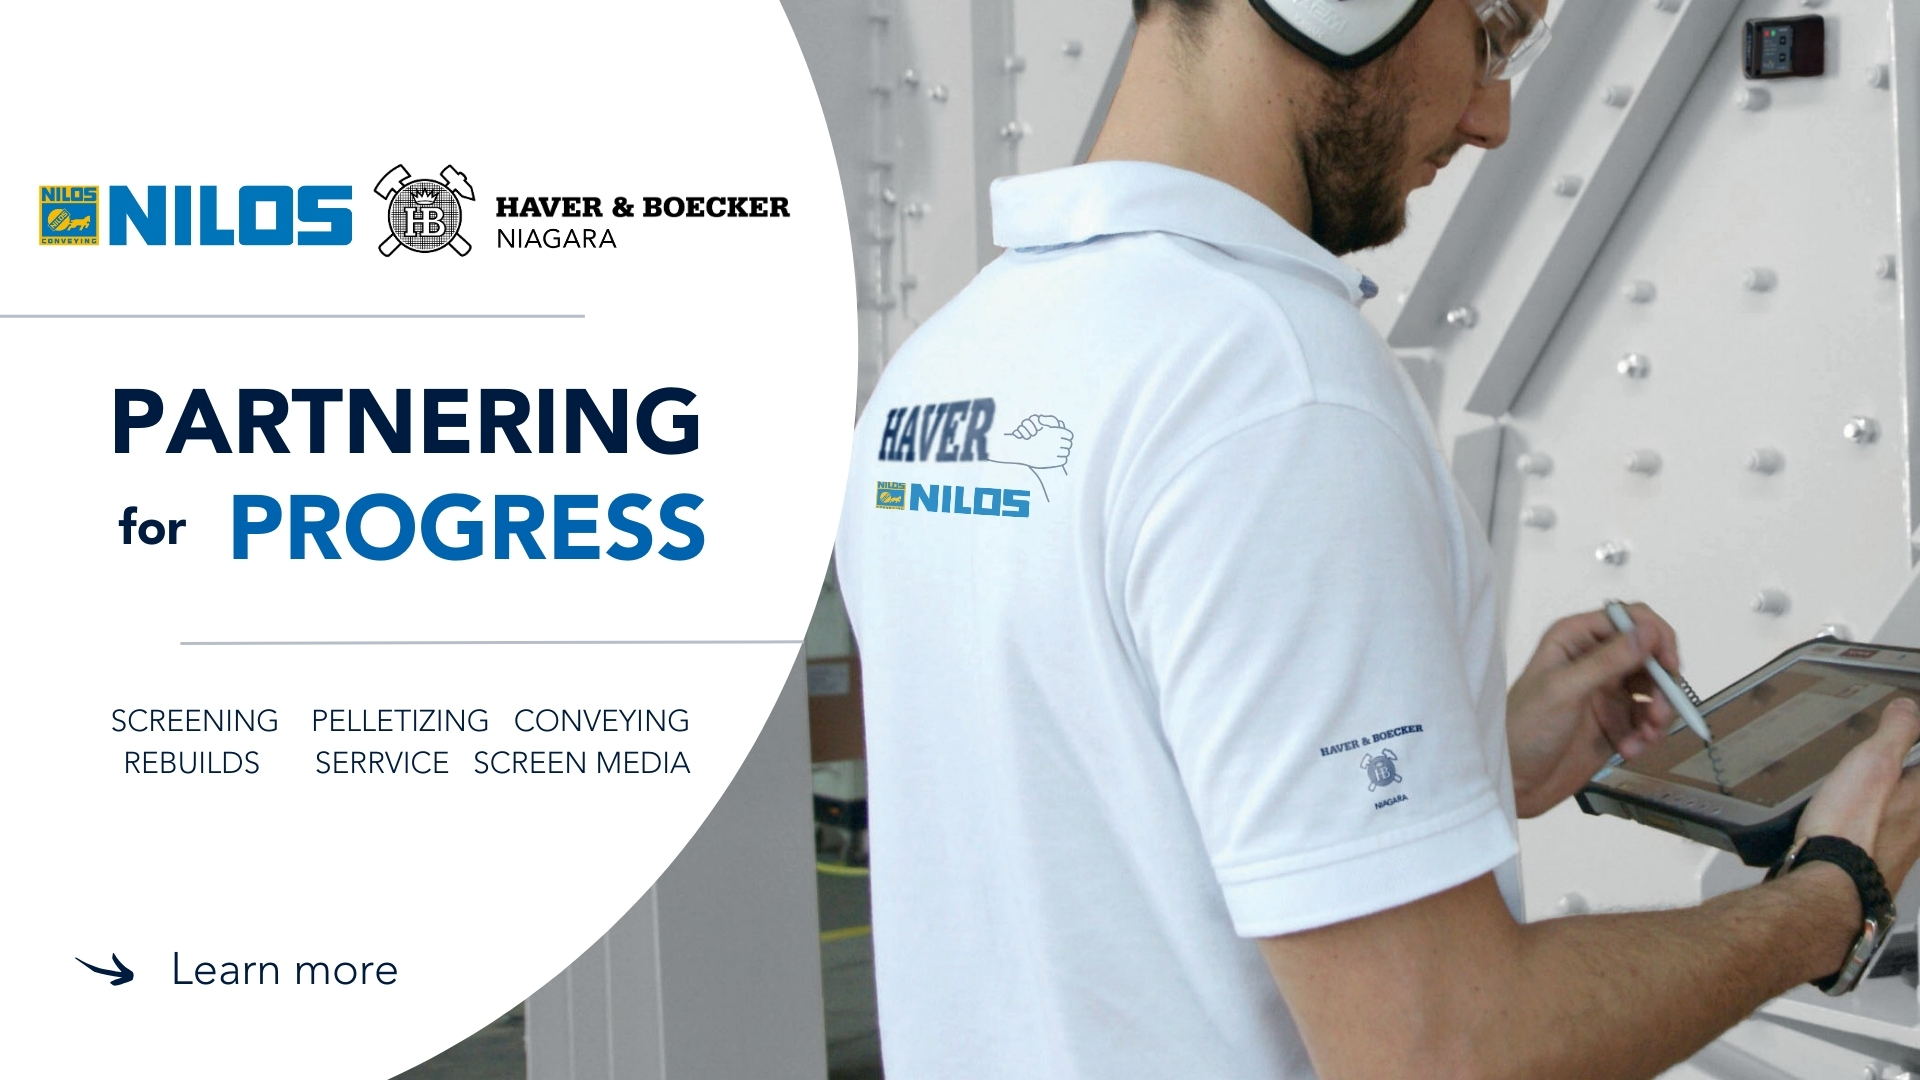 Haver & Boecker Niagara & Nilos: New service and sales partnership in Switzerland